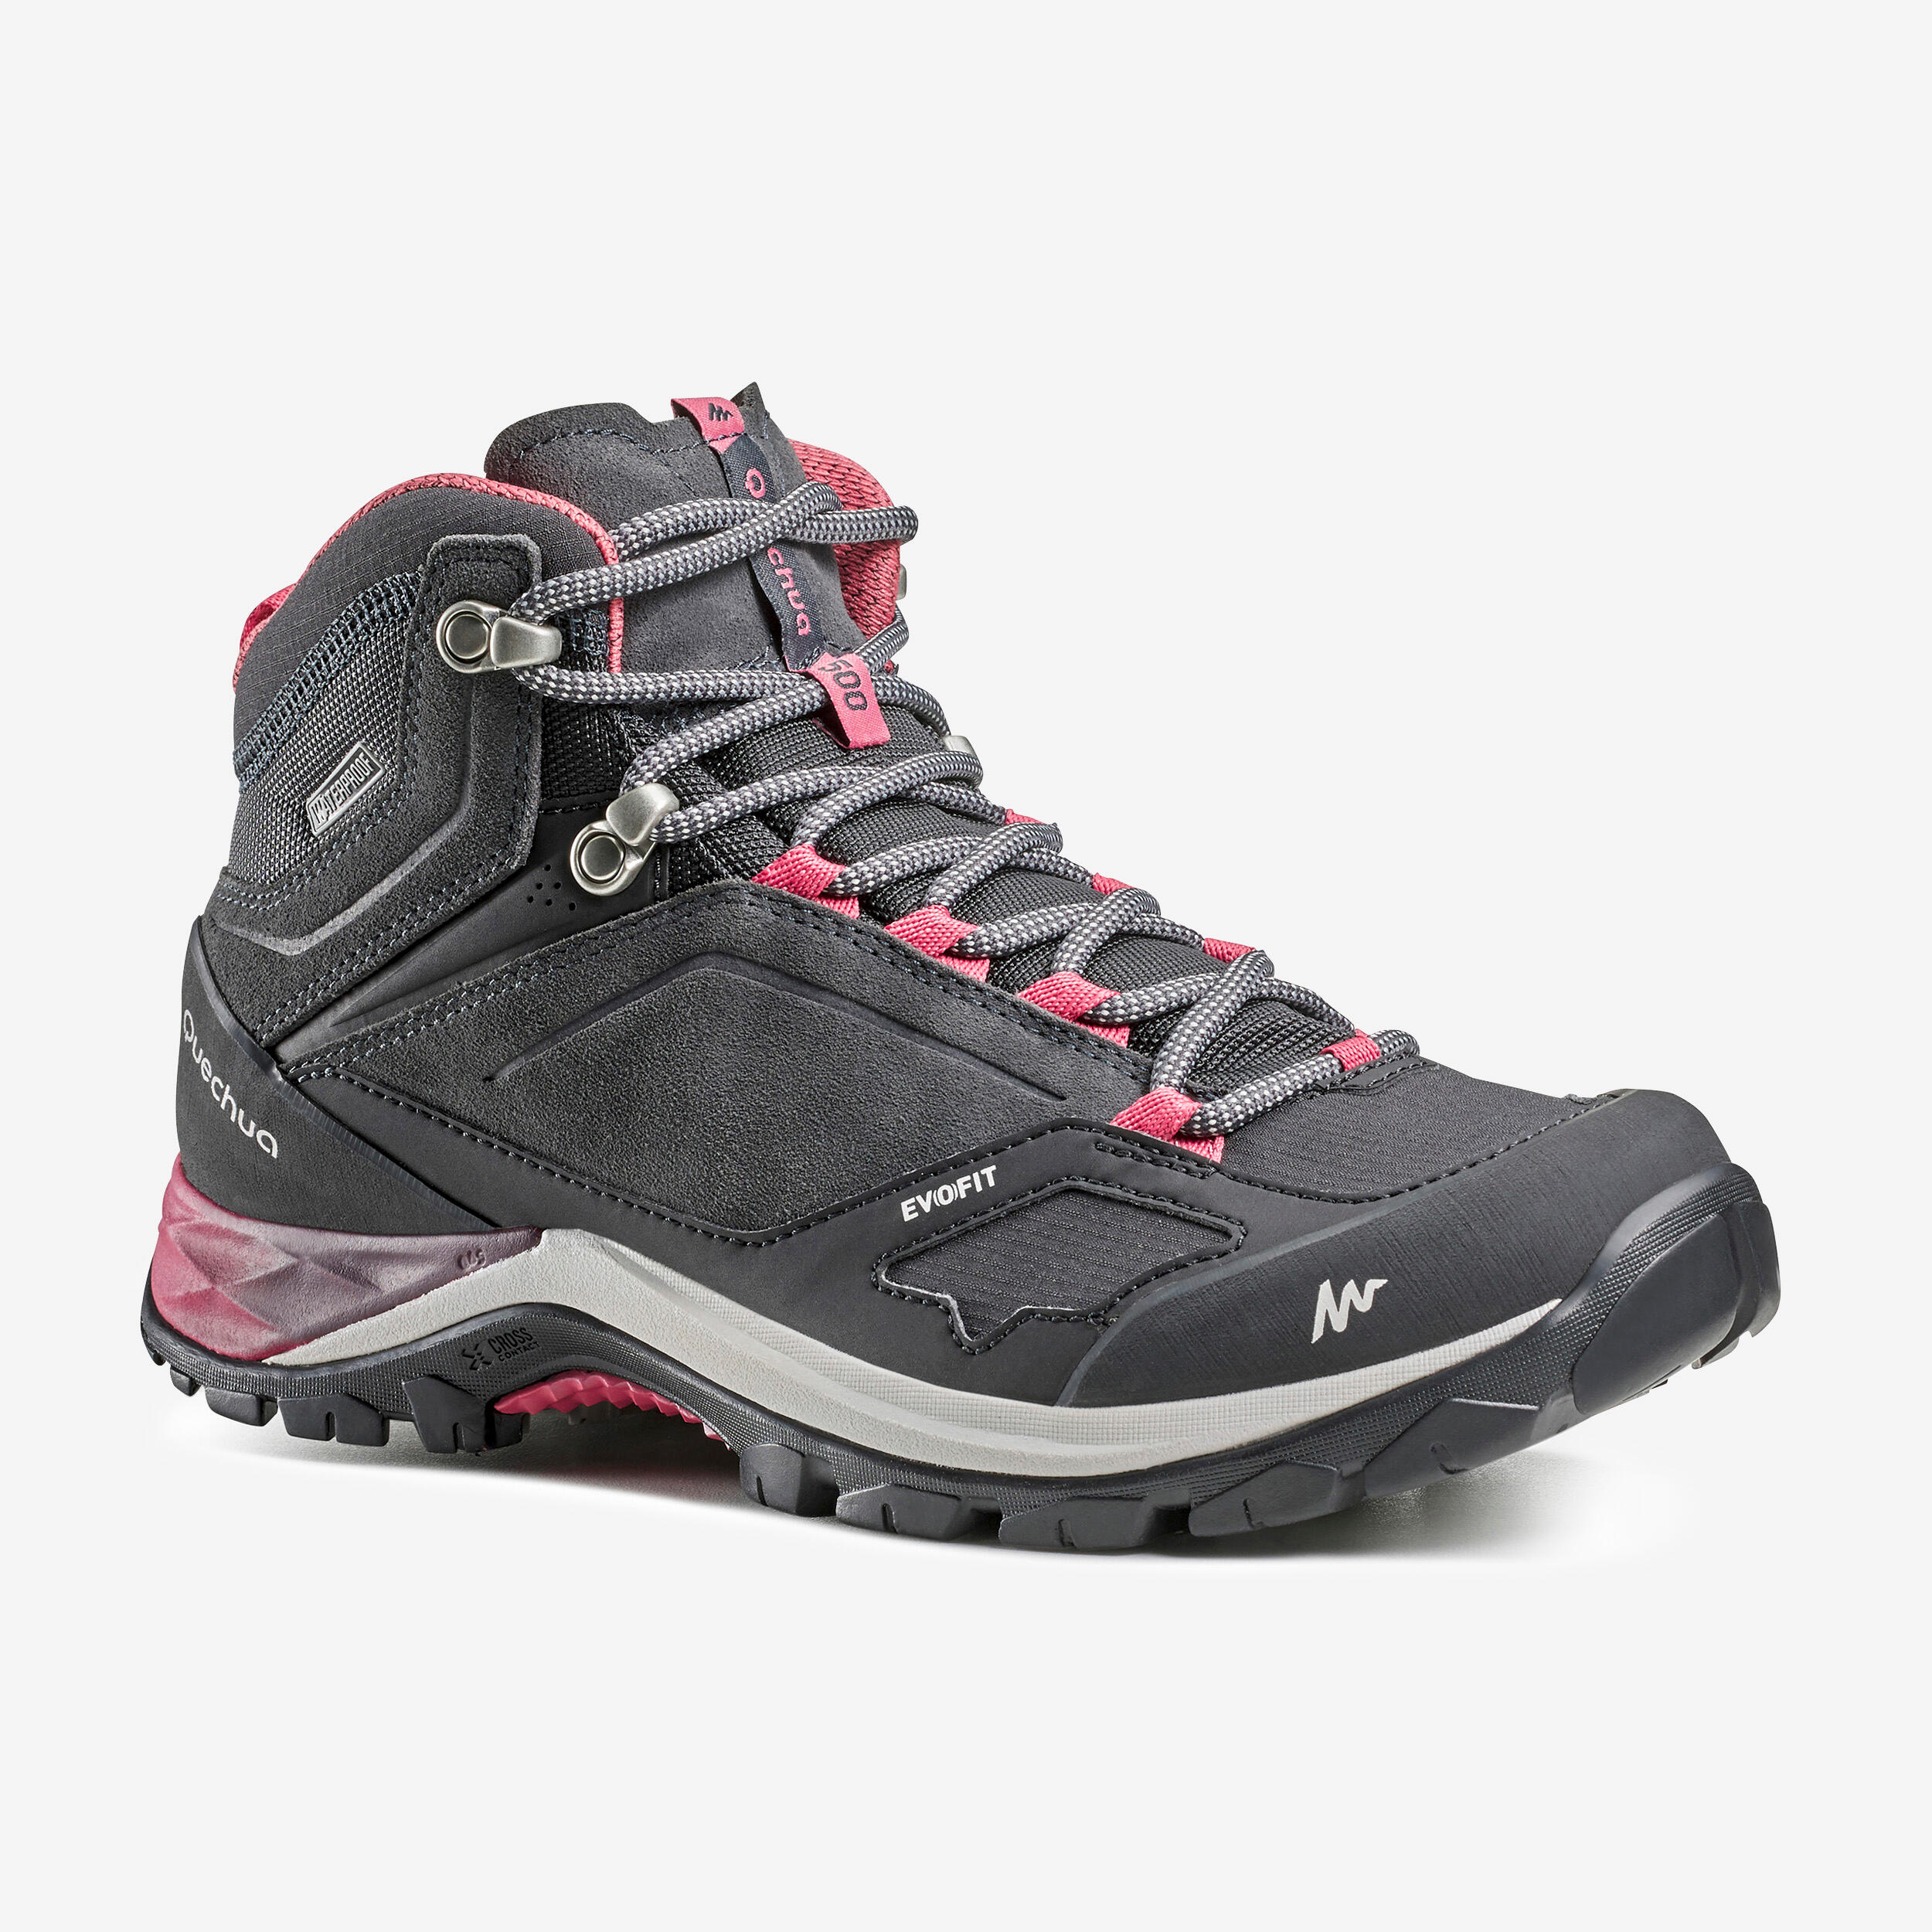 QUECHUA Women's waterproof mountain hiking boots - MH500 Mid - Pink/Grey